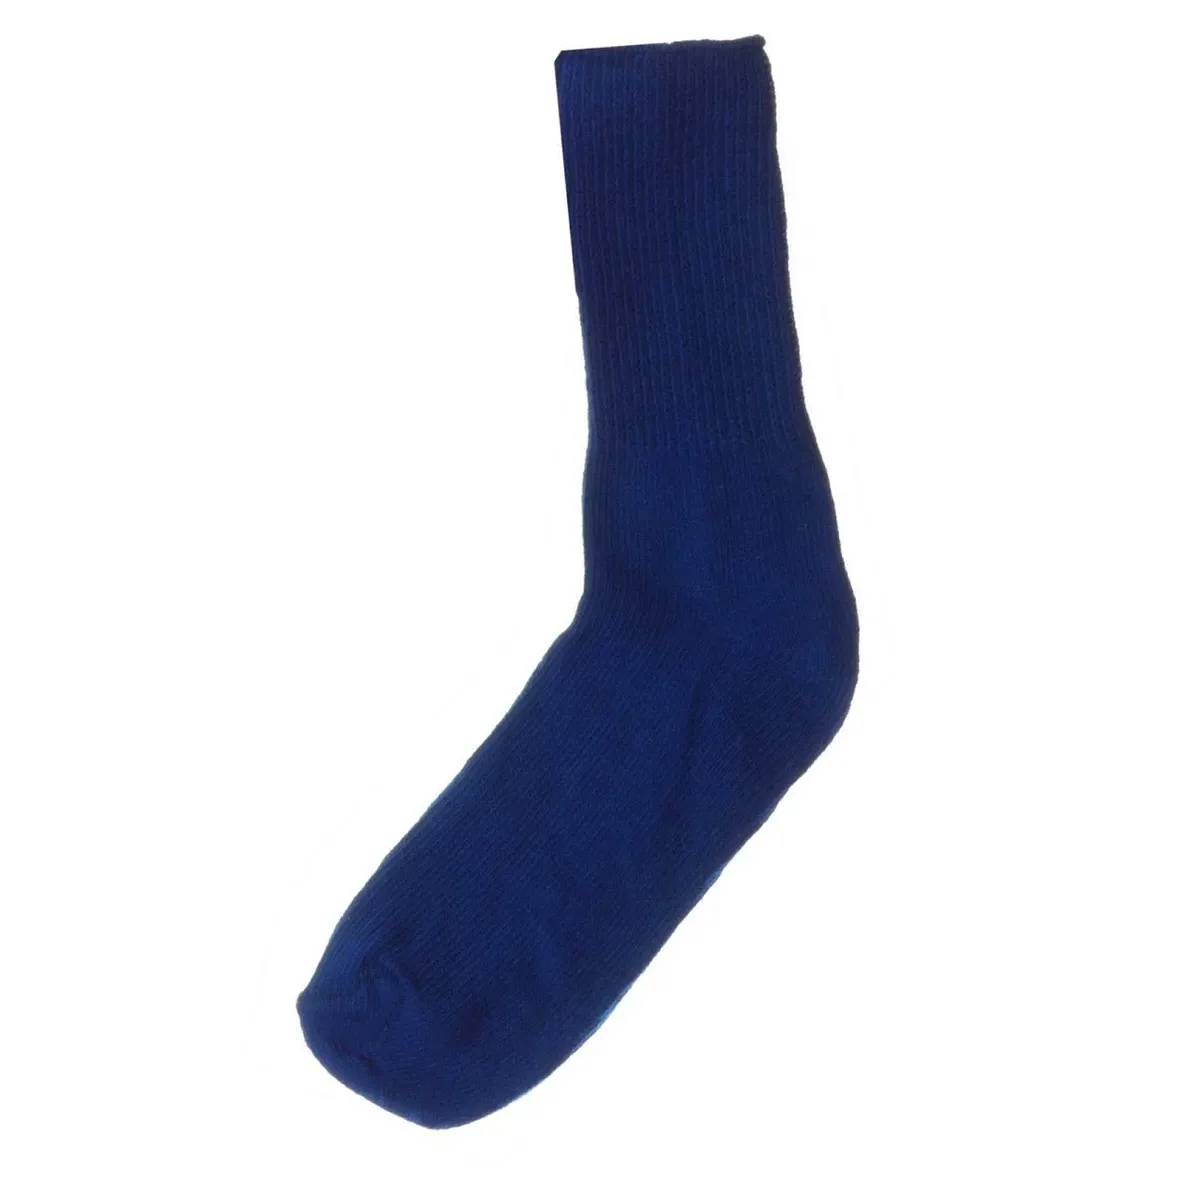 Blauwe sokken